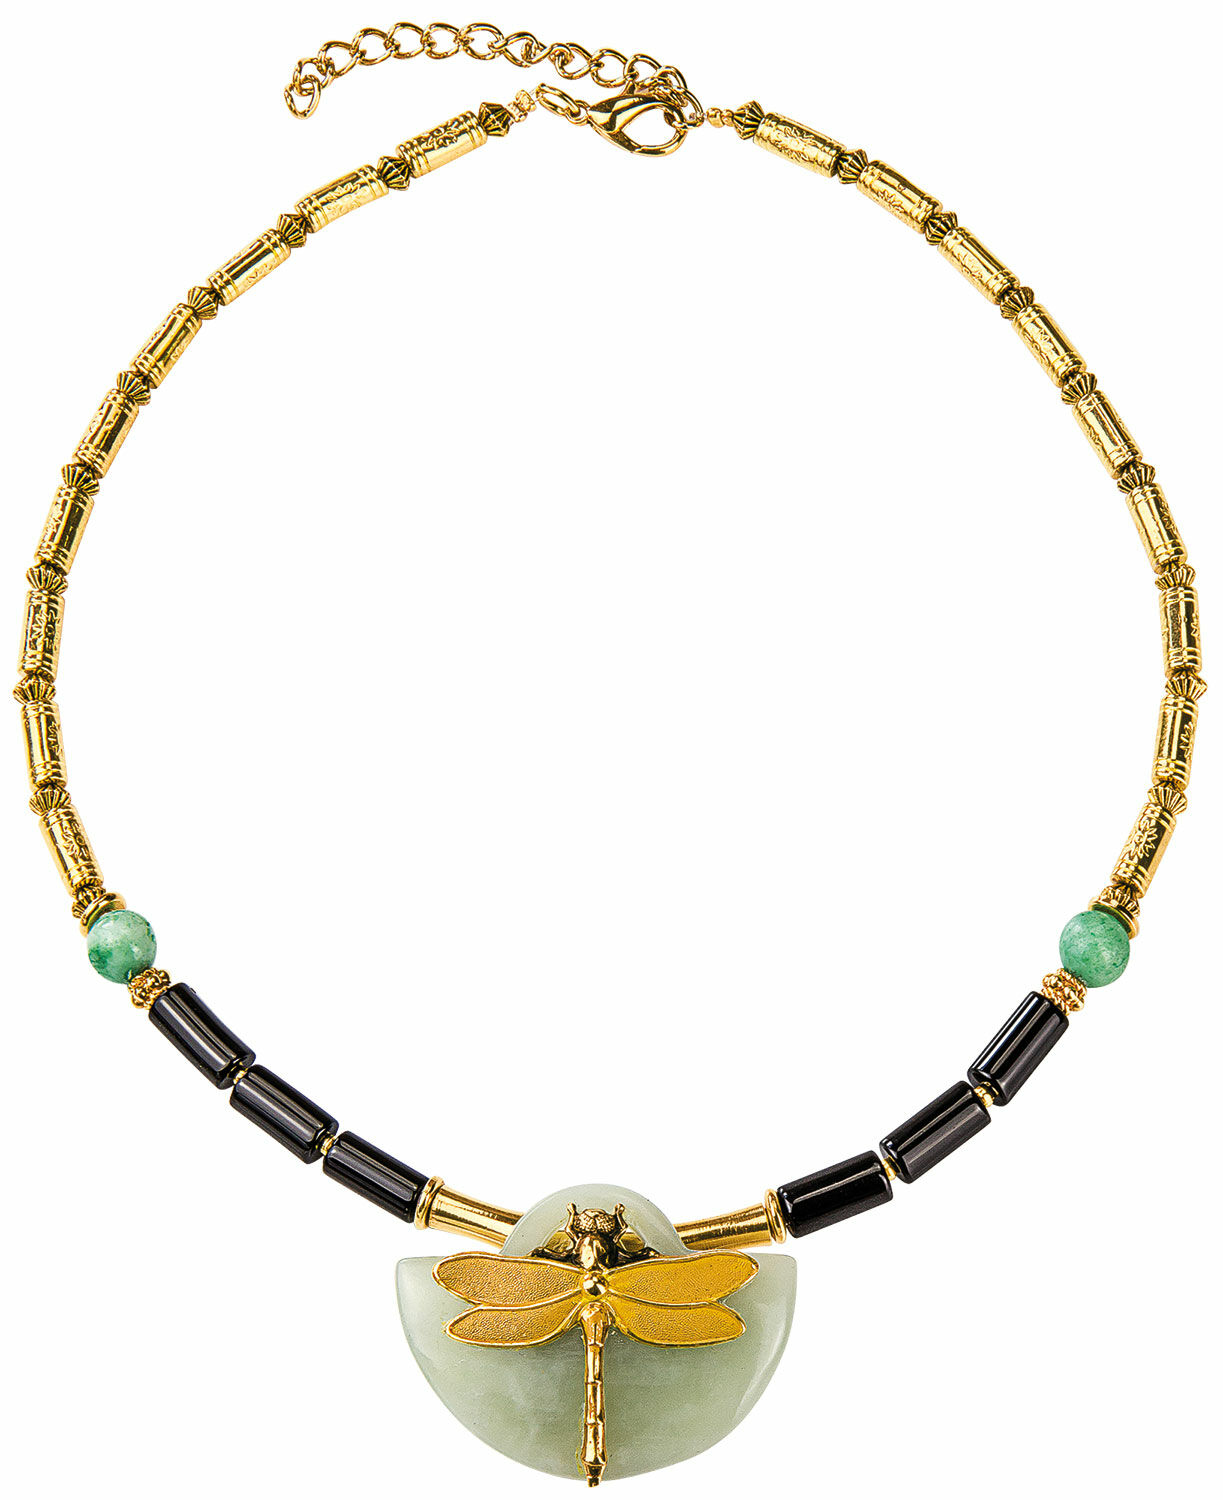 Necklace "Dragonfly" by Petra Waszak